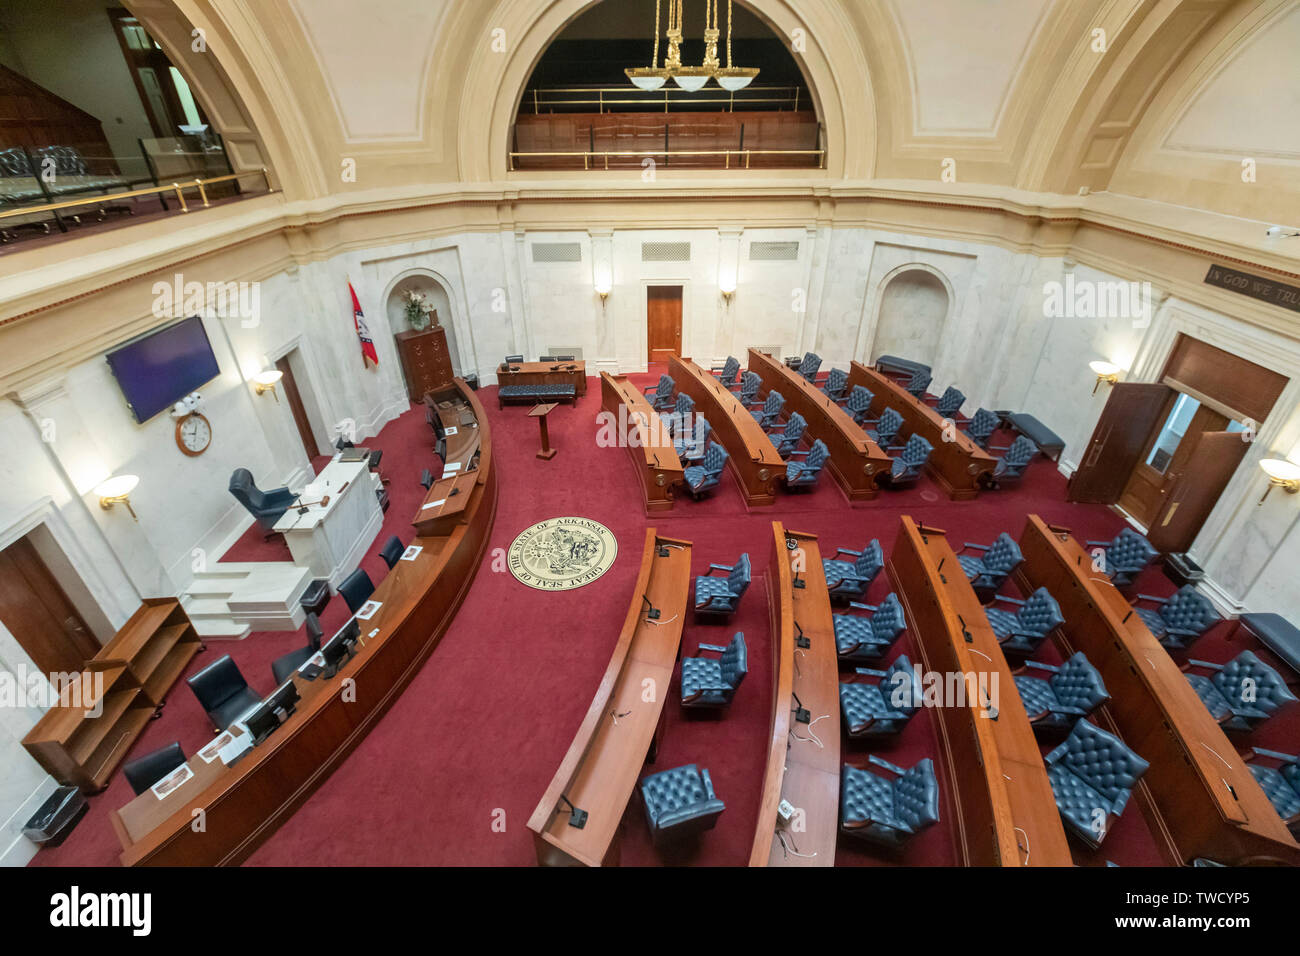 Little Rock, Arkansas - The Senate chamber in the Arkansas state capitol building. Stock Photo